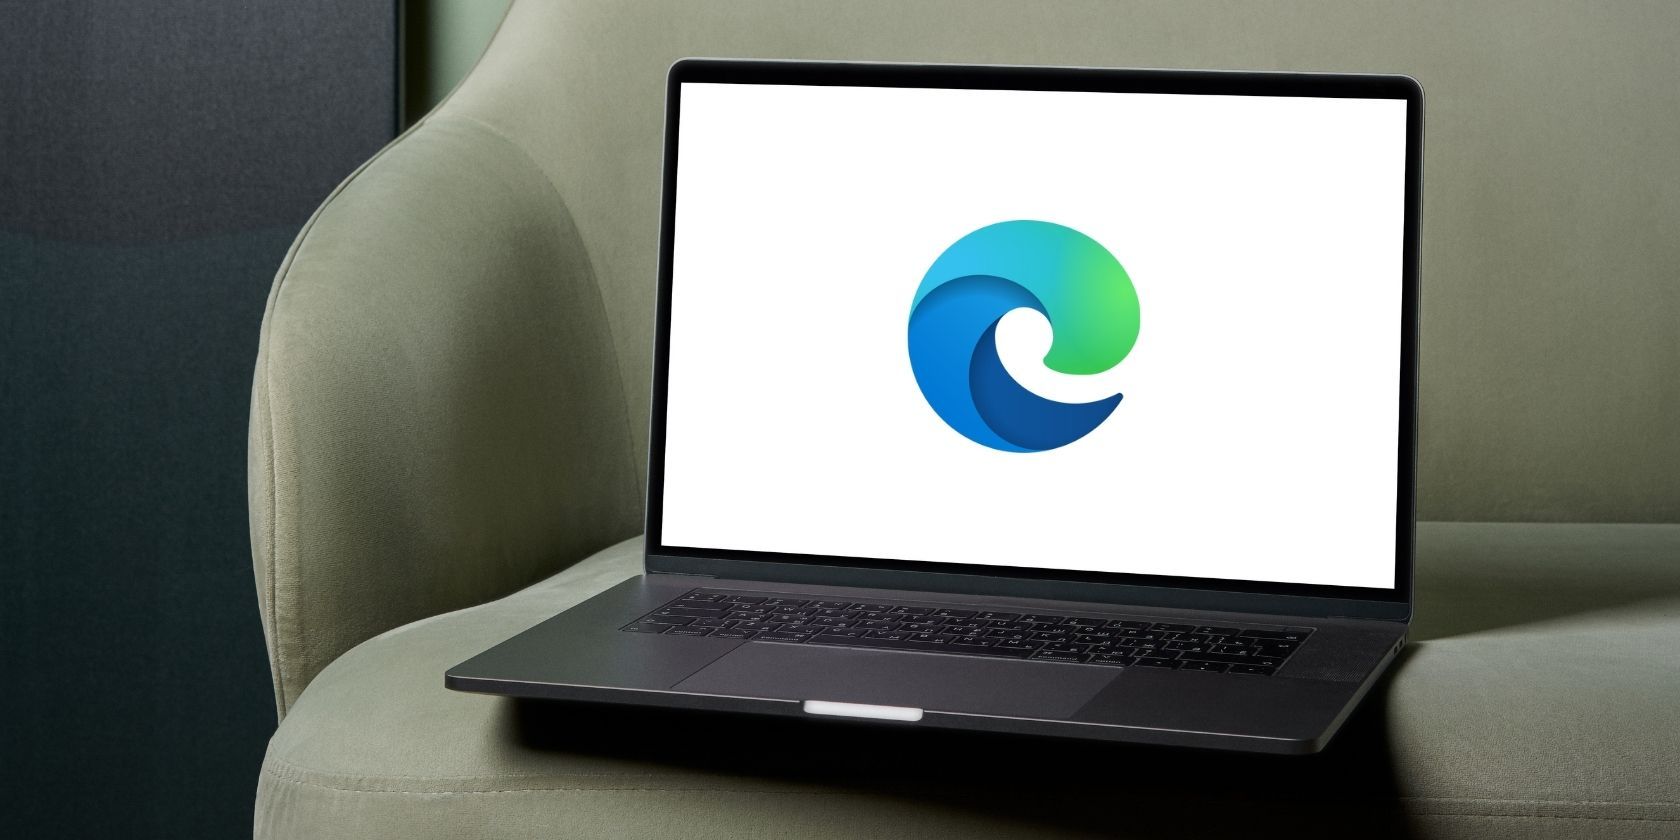 Microsoft edge browser logo on a laptop screen